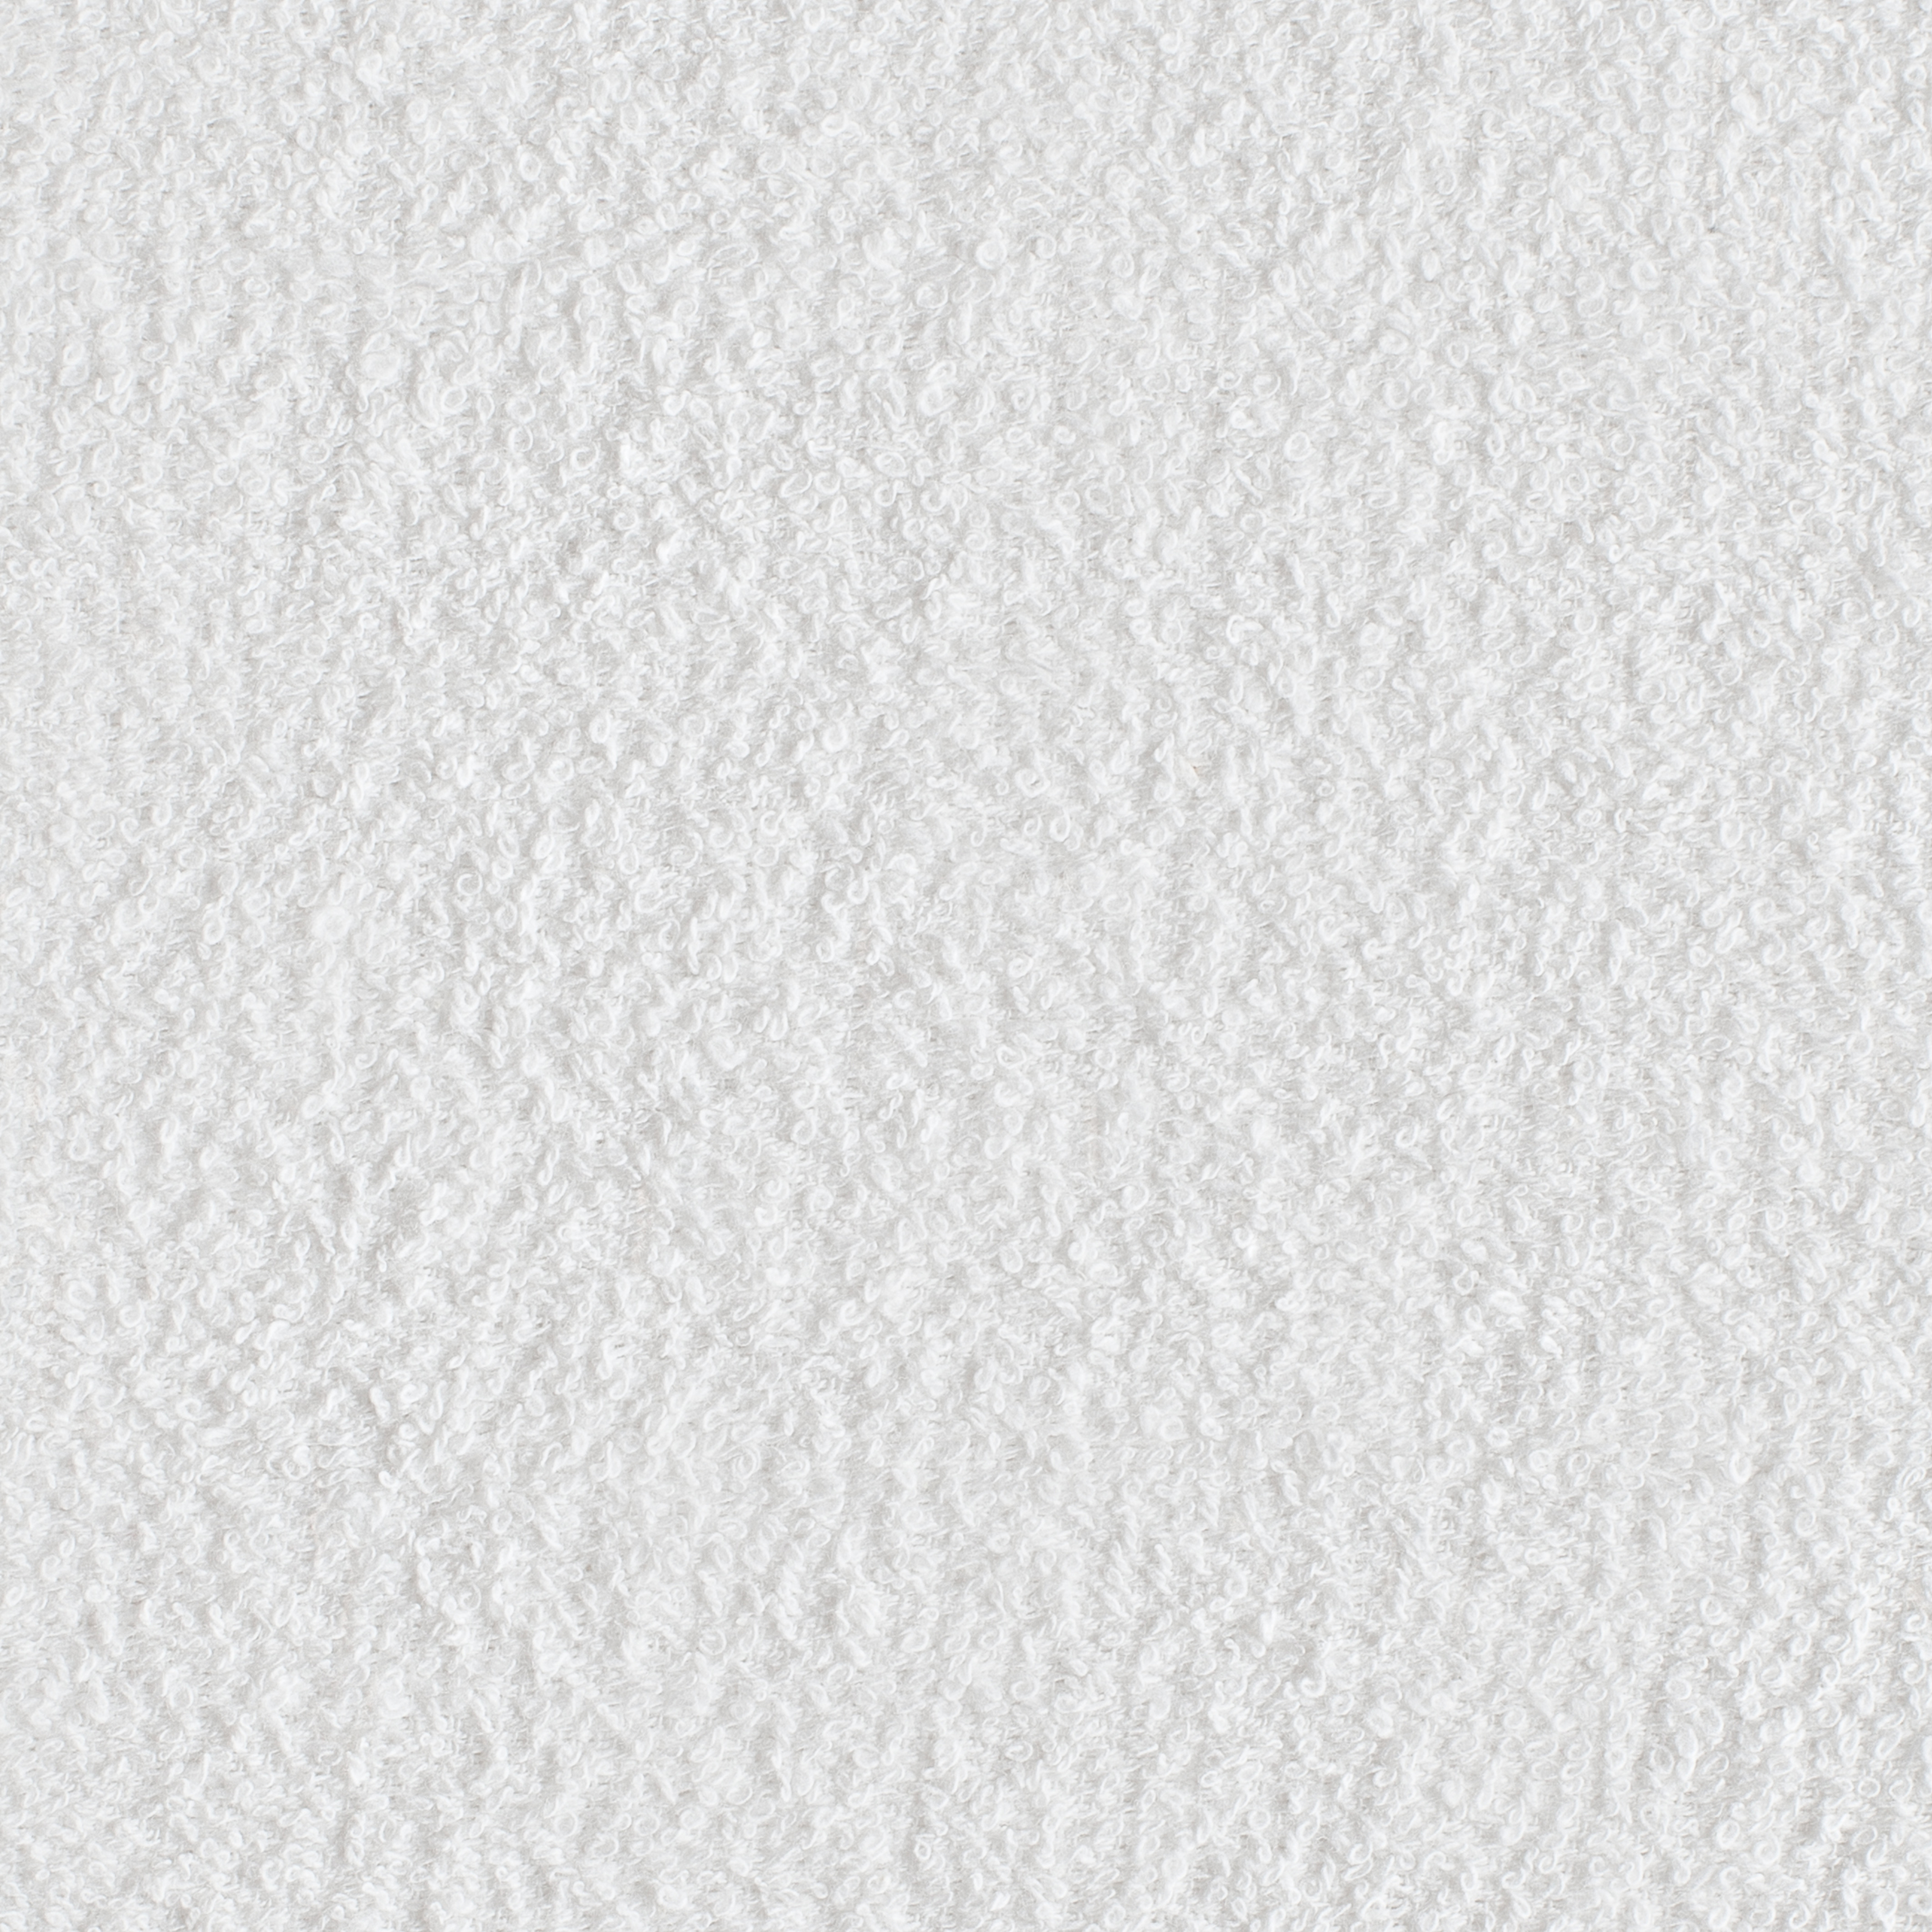 White Surface Textures 2 - shutterstock_151625606.jpg